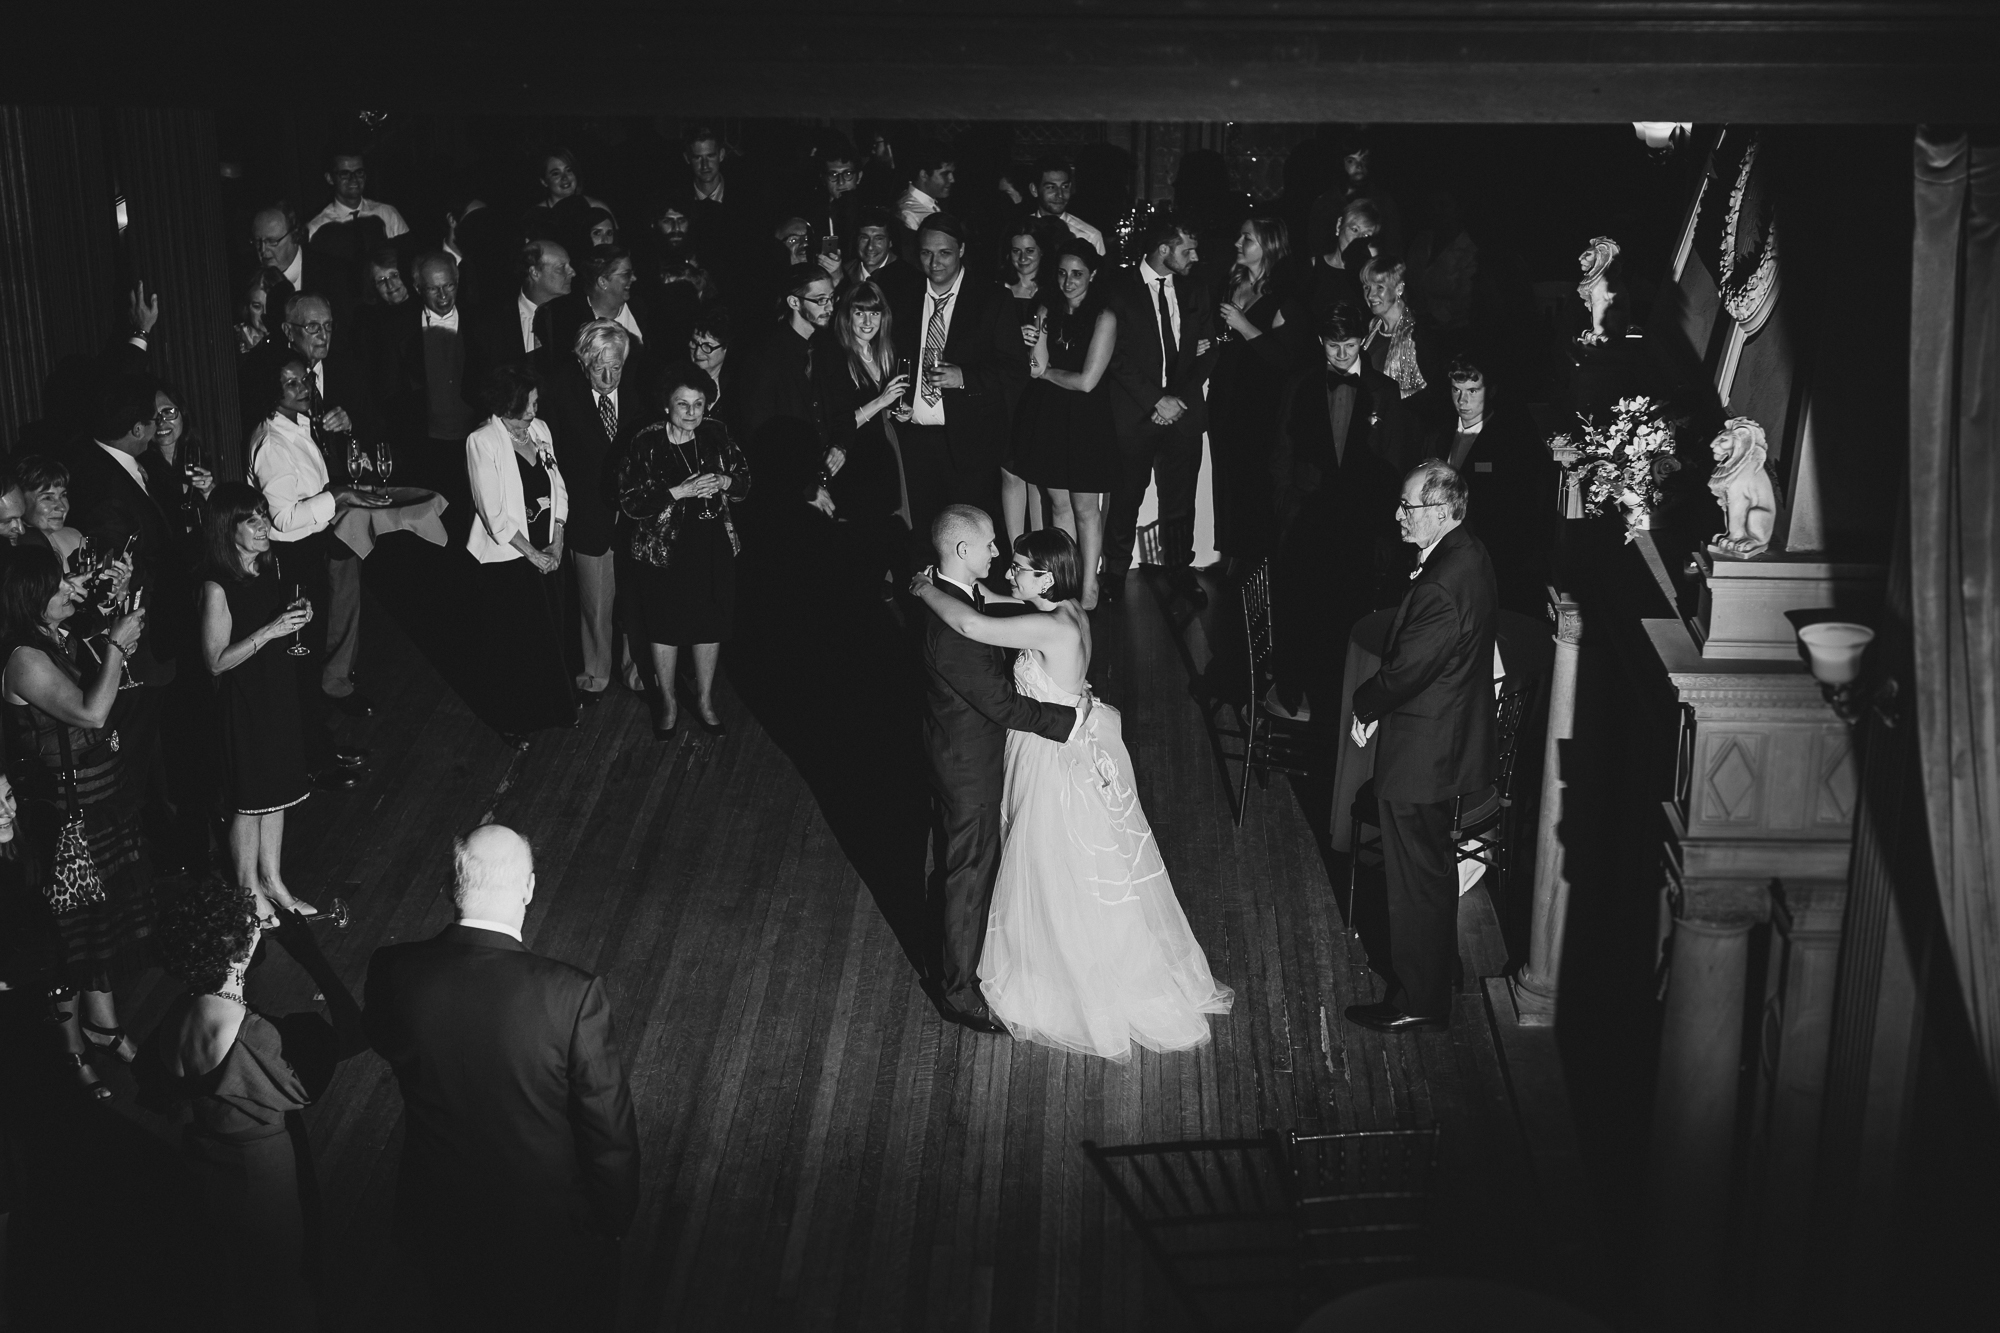 Ventfort-Hall-Lenox-Massachusetts-Documentary-Wedding-Photographer-59.jpg